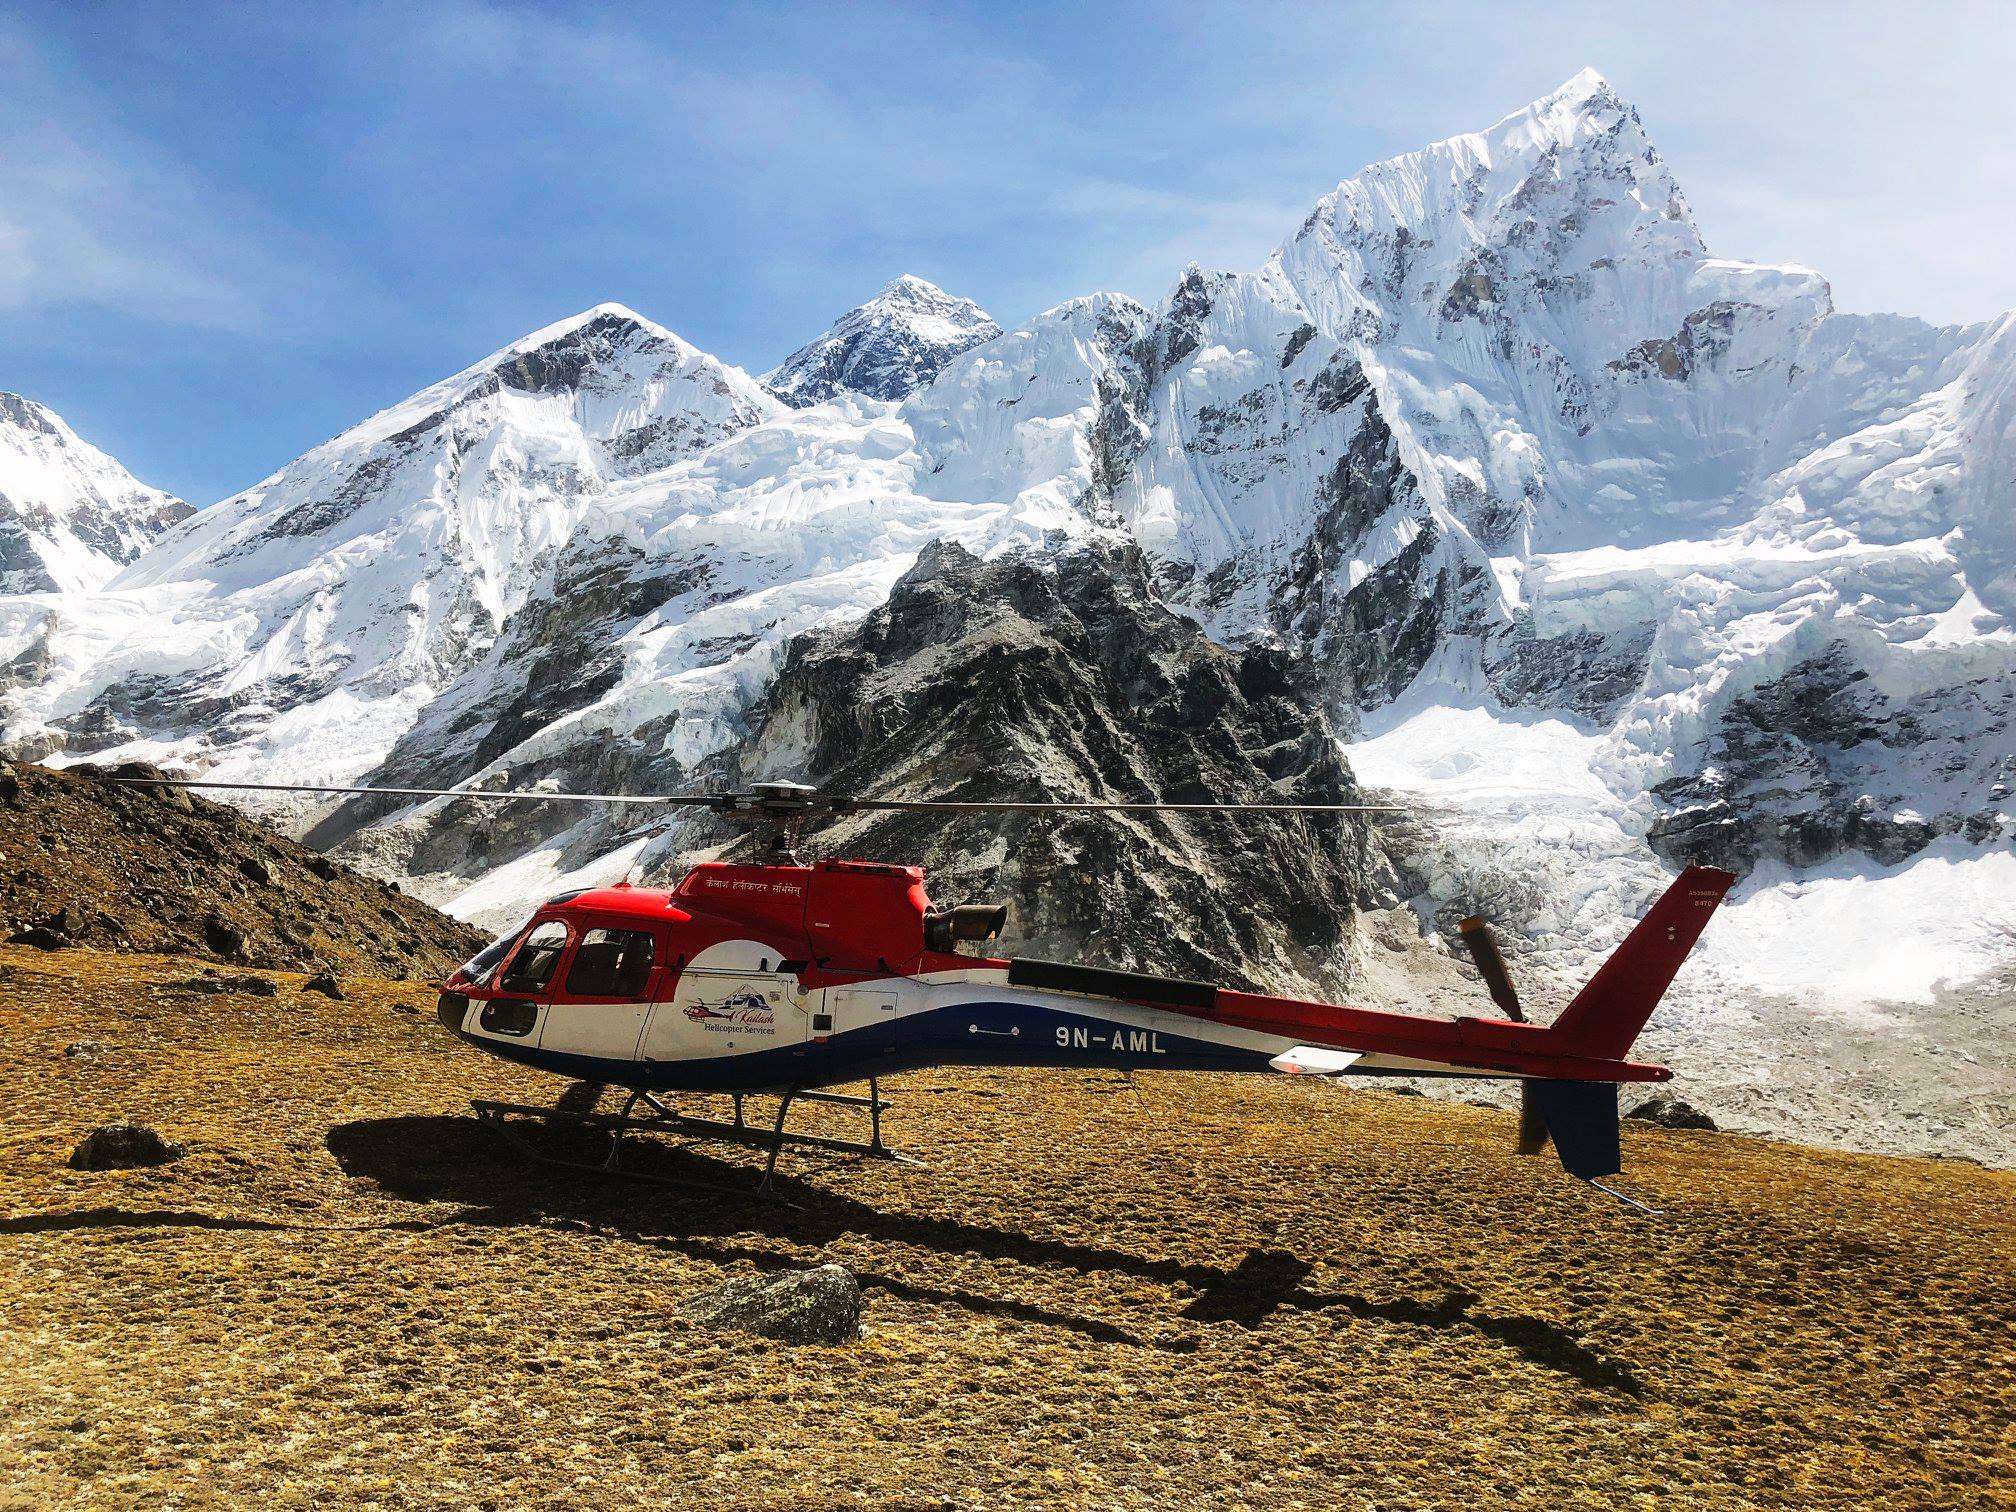 Everest Base Camp Helicopter Tour (from Kathmandu) - 1 days | HoneyGuide